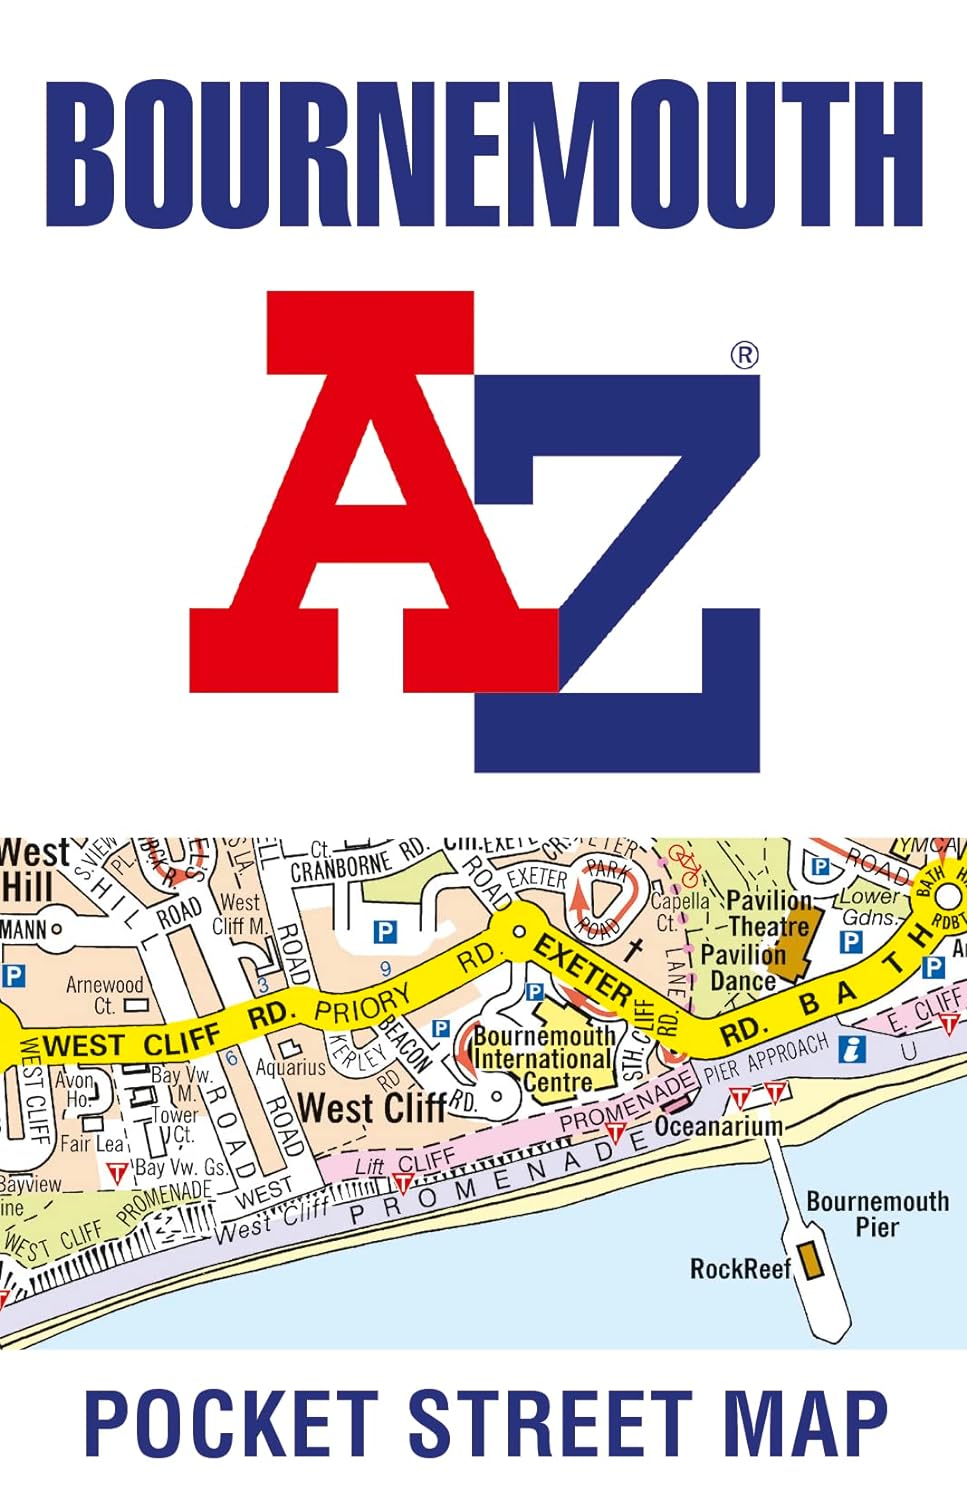 Online bestellen: Stadsplattegrond Pocket Street Map Bournemouth | A-Z Map Company